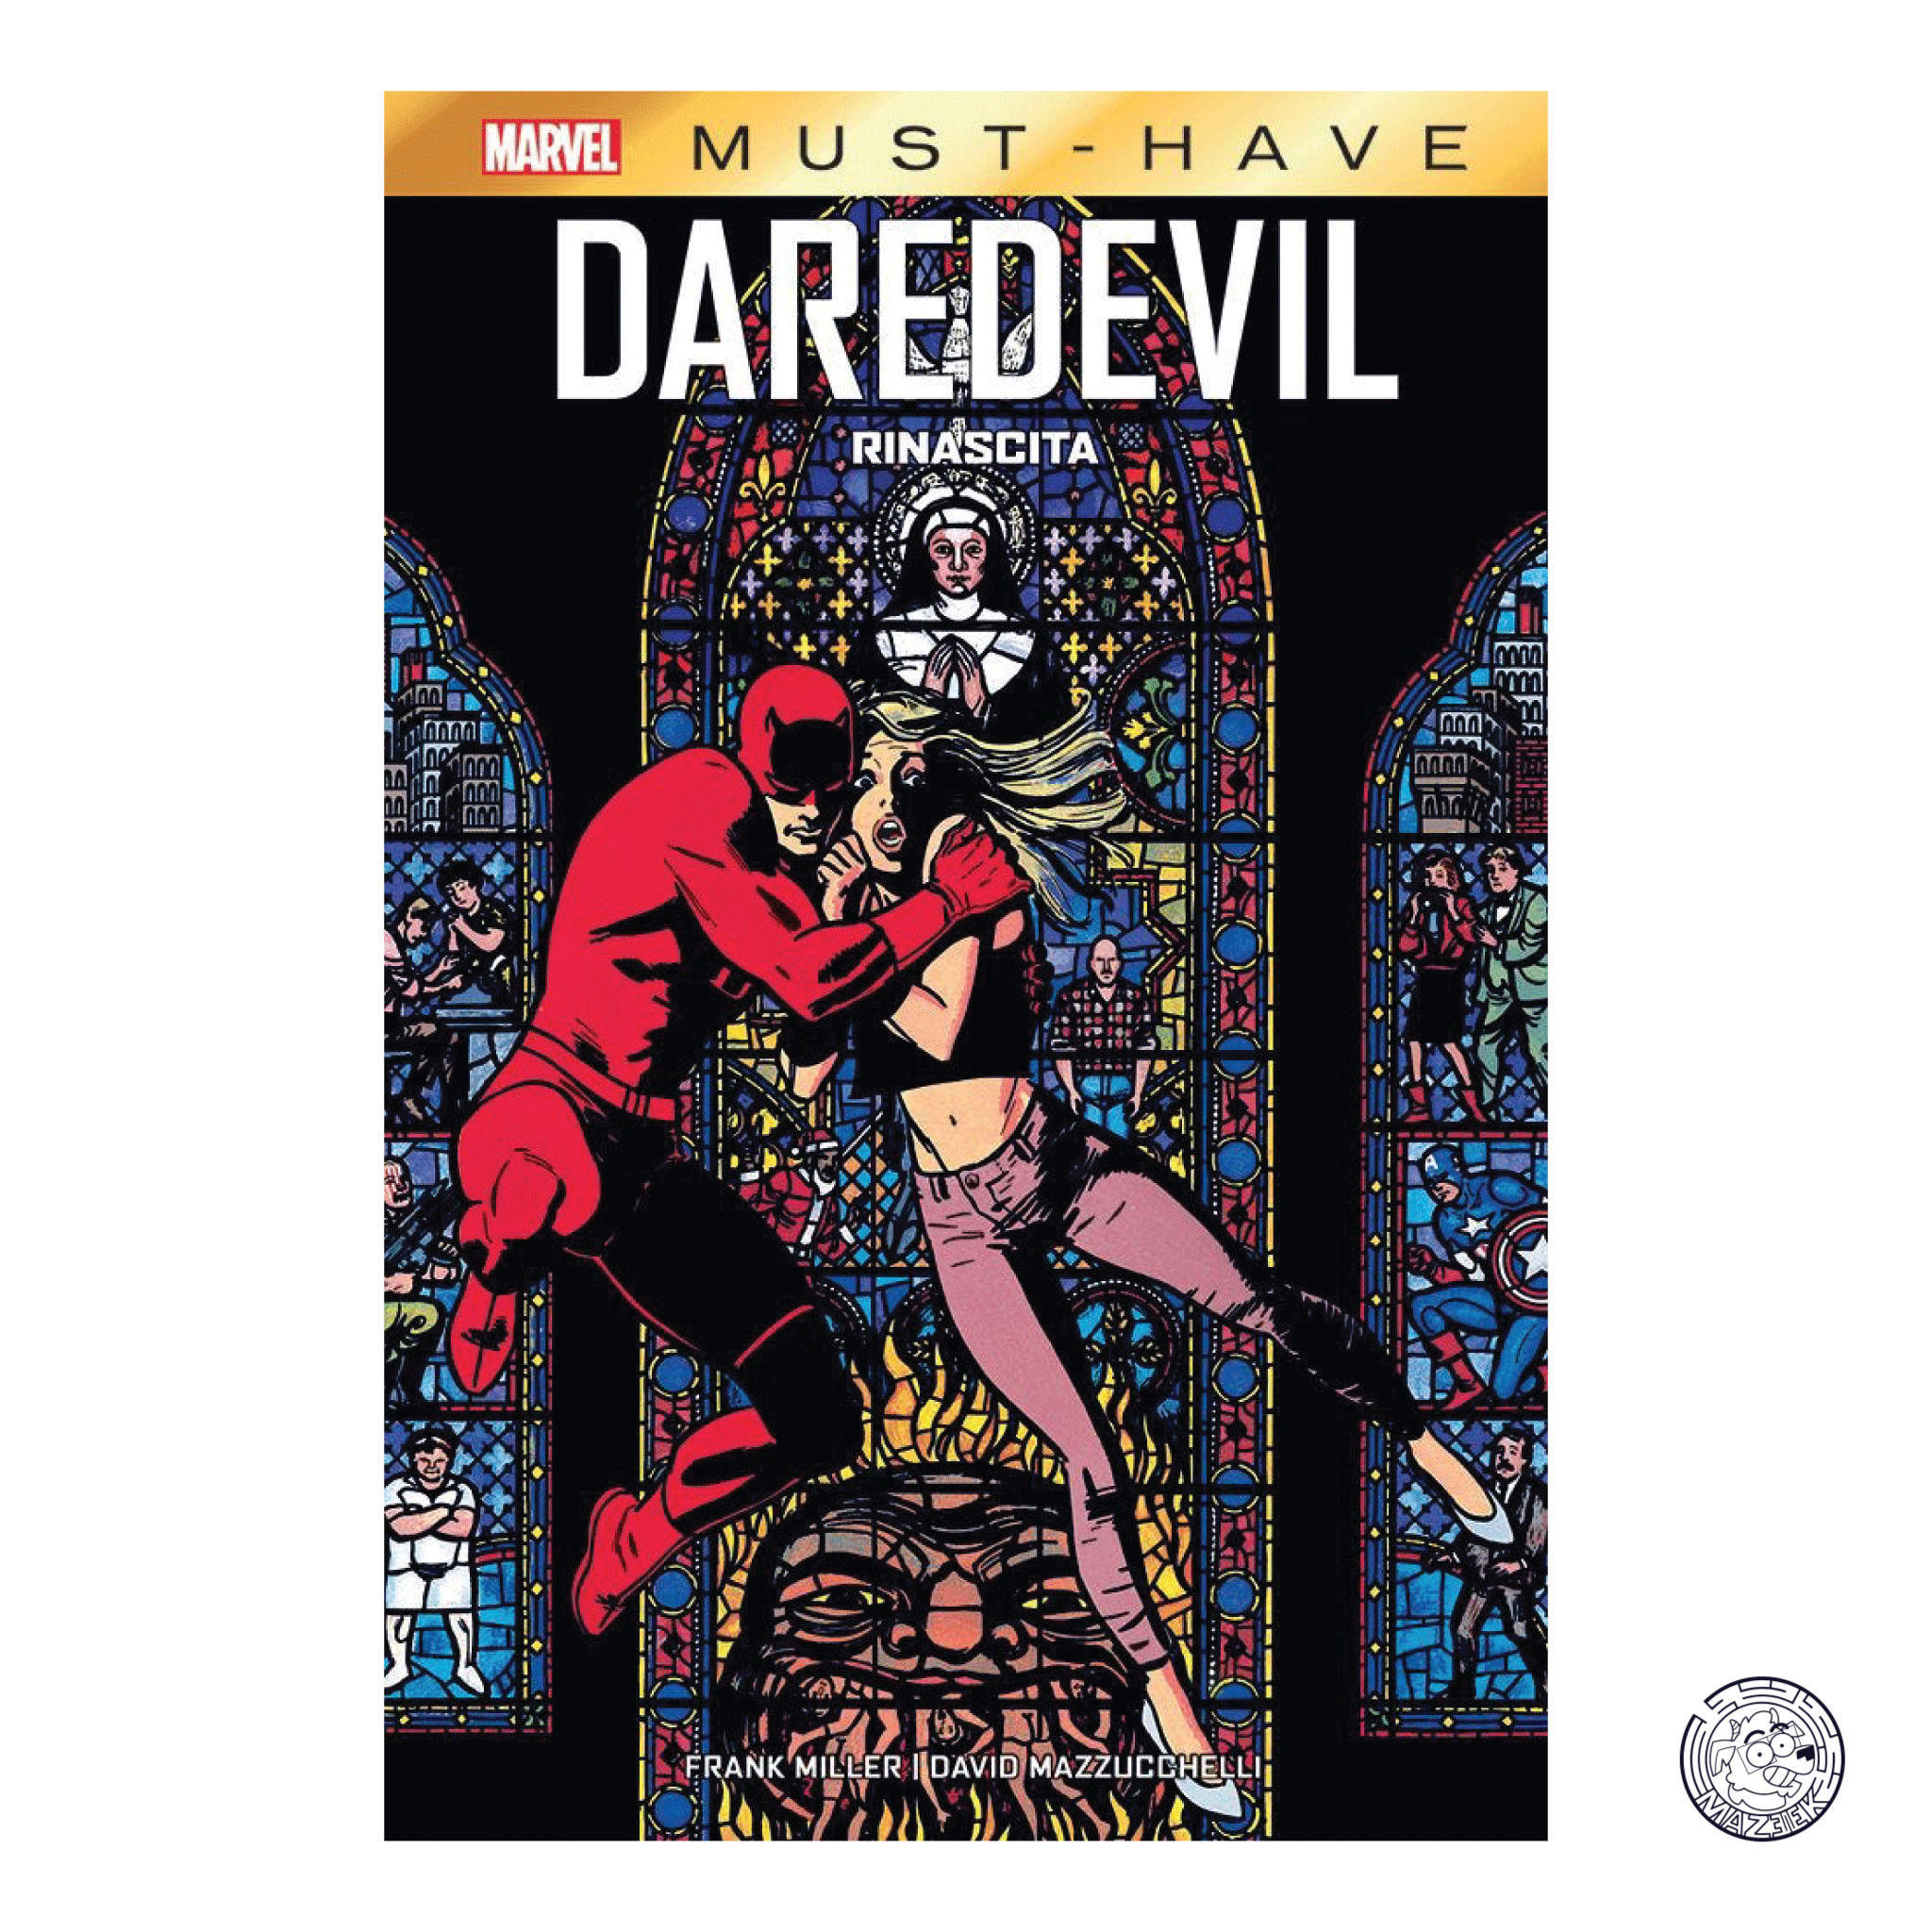 Marvel Must Have - Daredevil: Rinascita